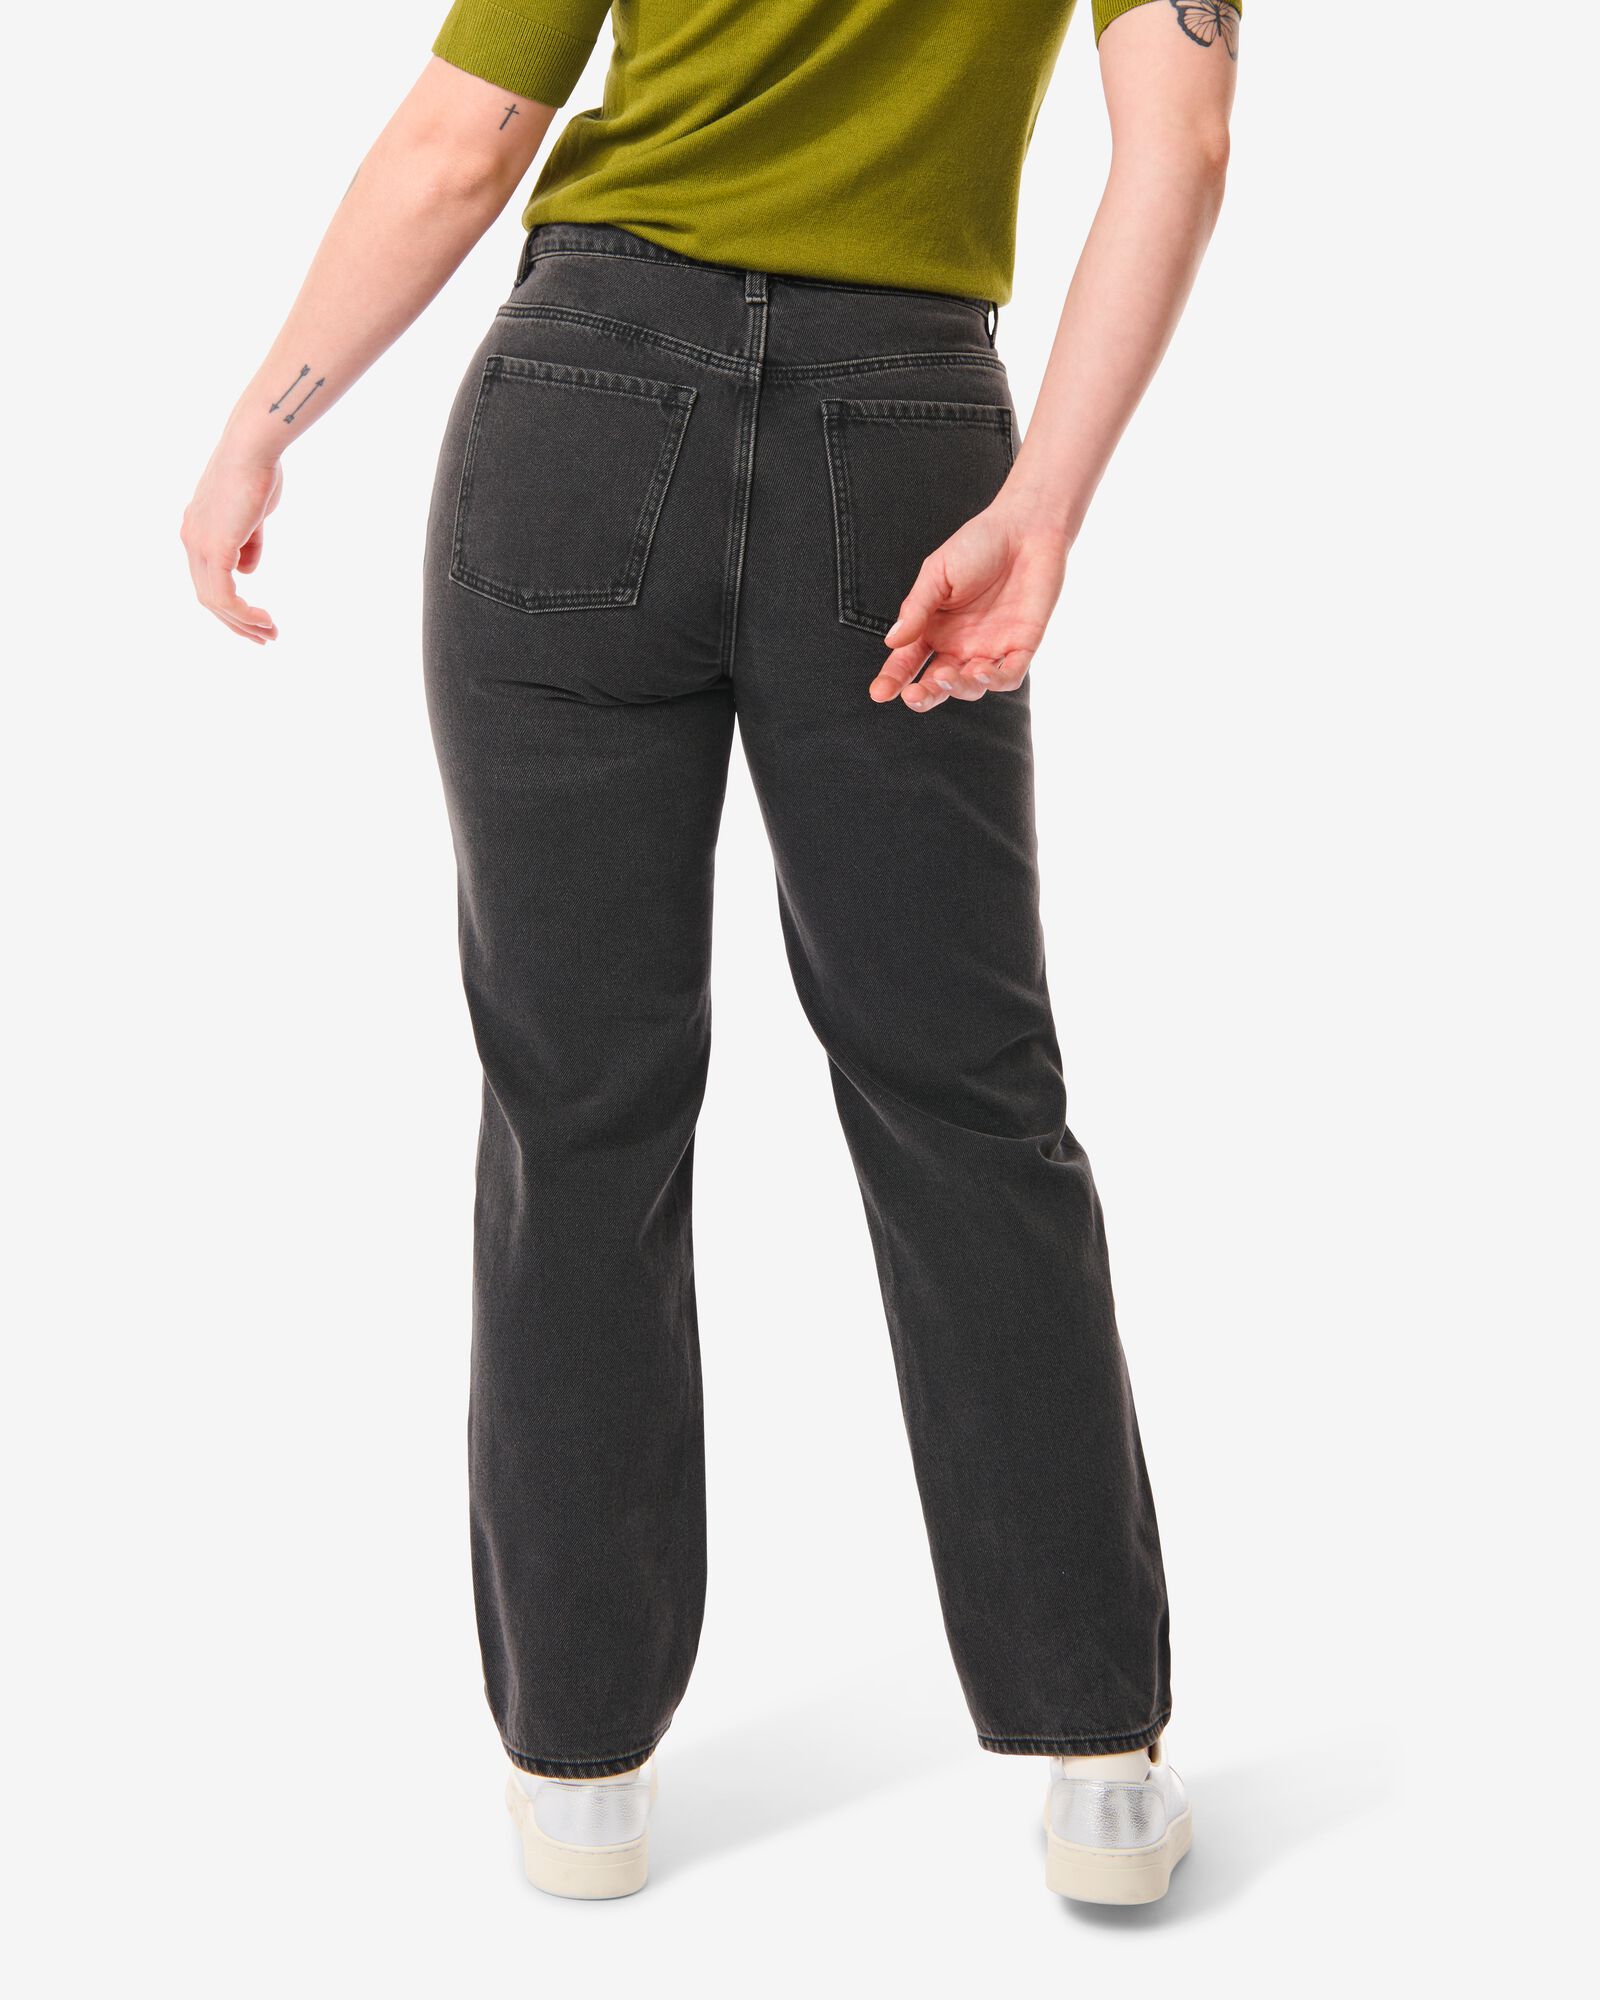 Damen-Jeans, Straight Fit dunkelgrau 38 - 36319982 - HEMA